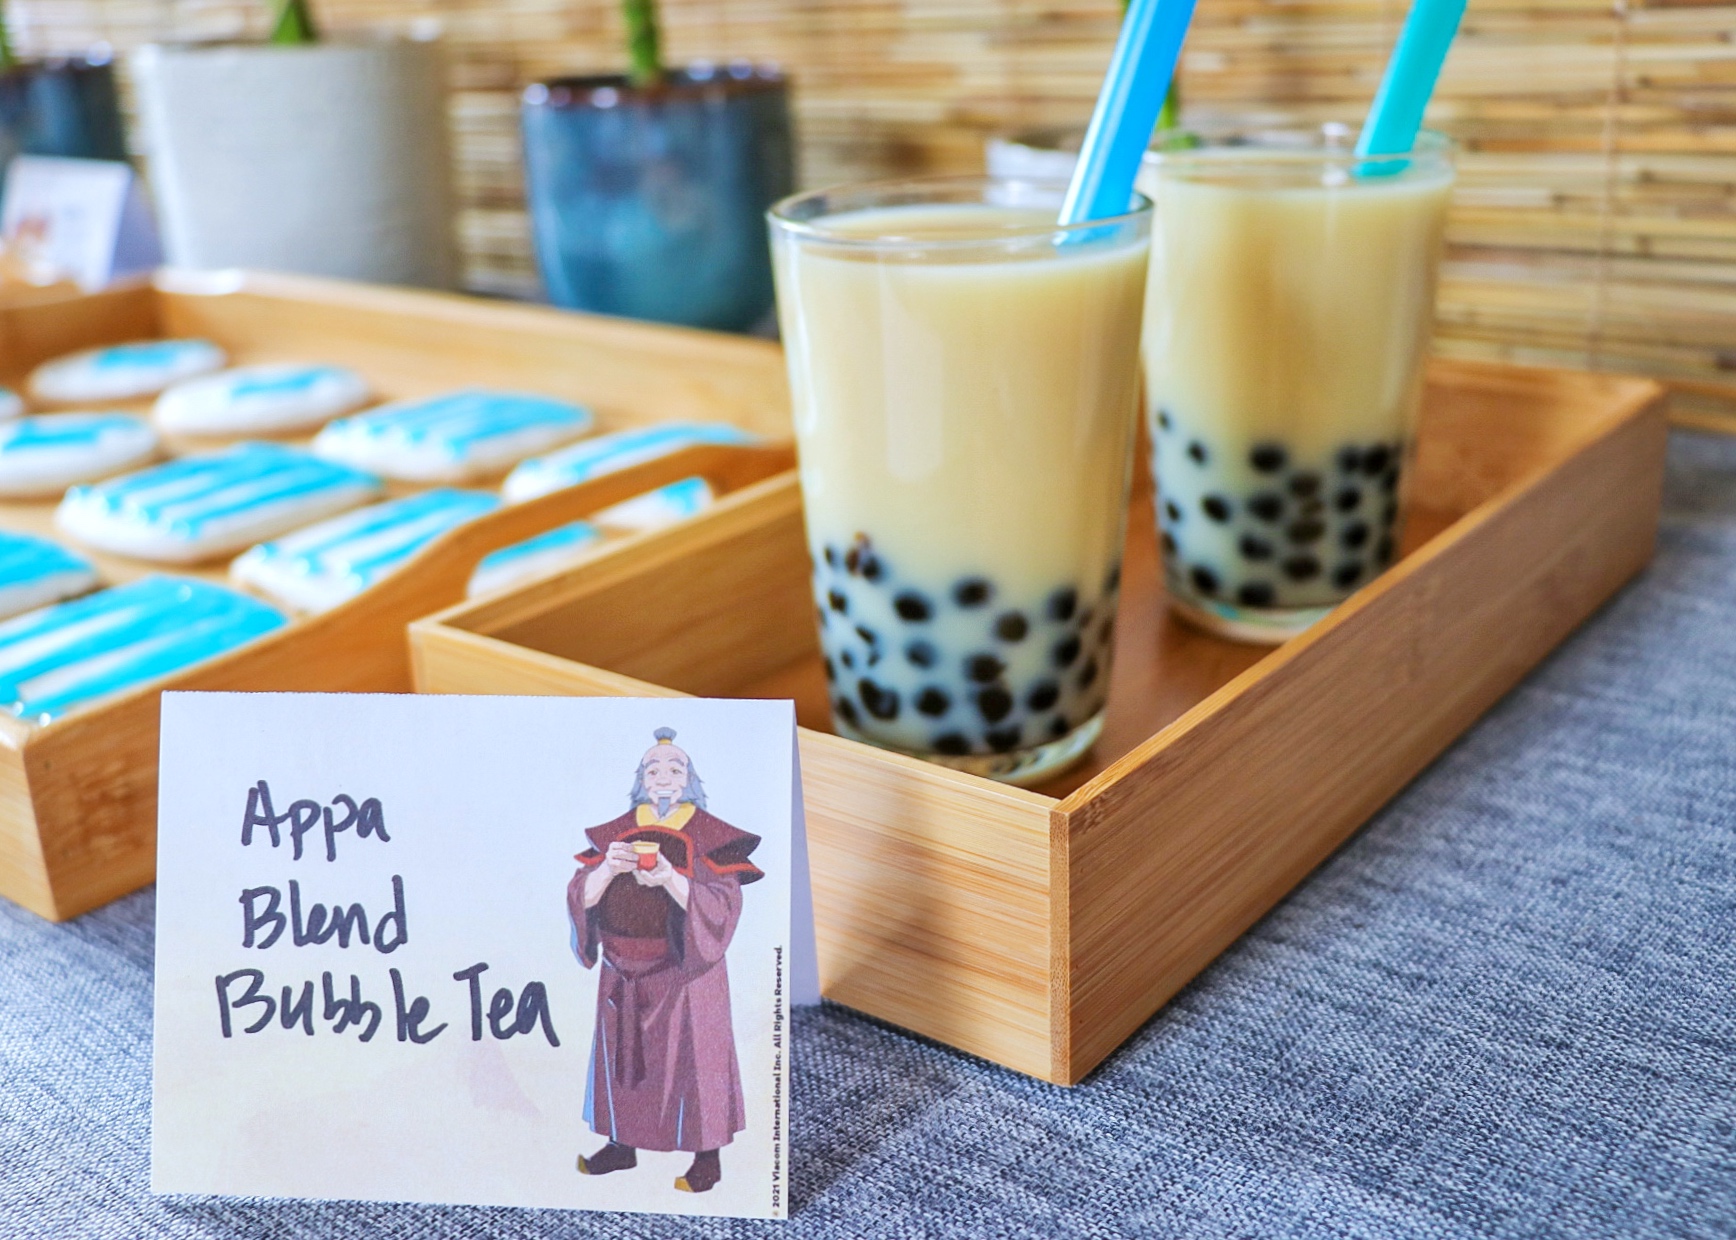 Avatar: The Last Airbender birthday food ideas - Uncle Iroh's Appa Blend Bubble Tea